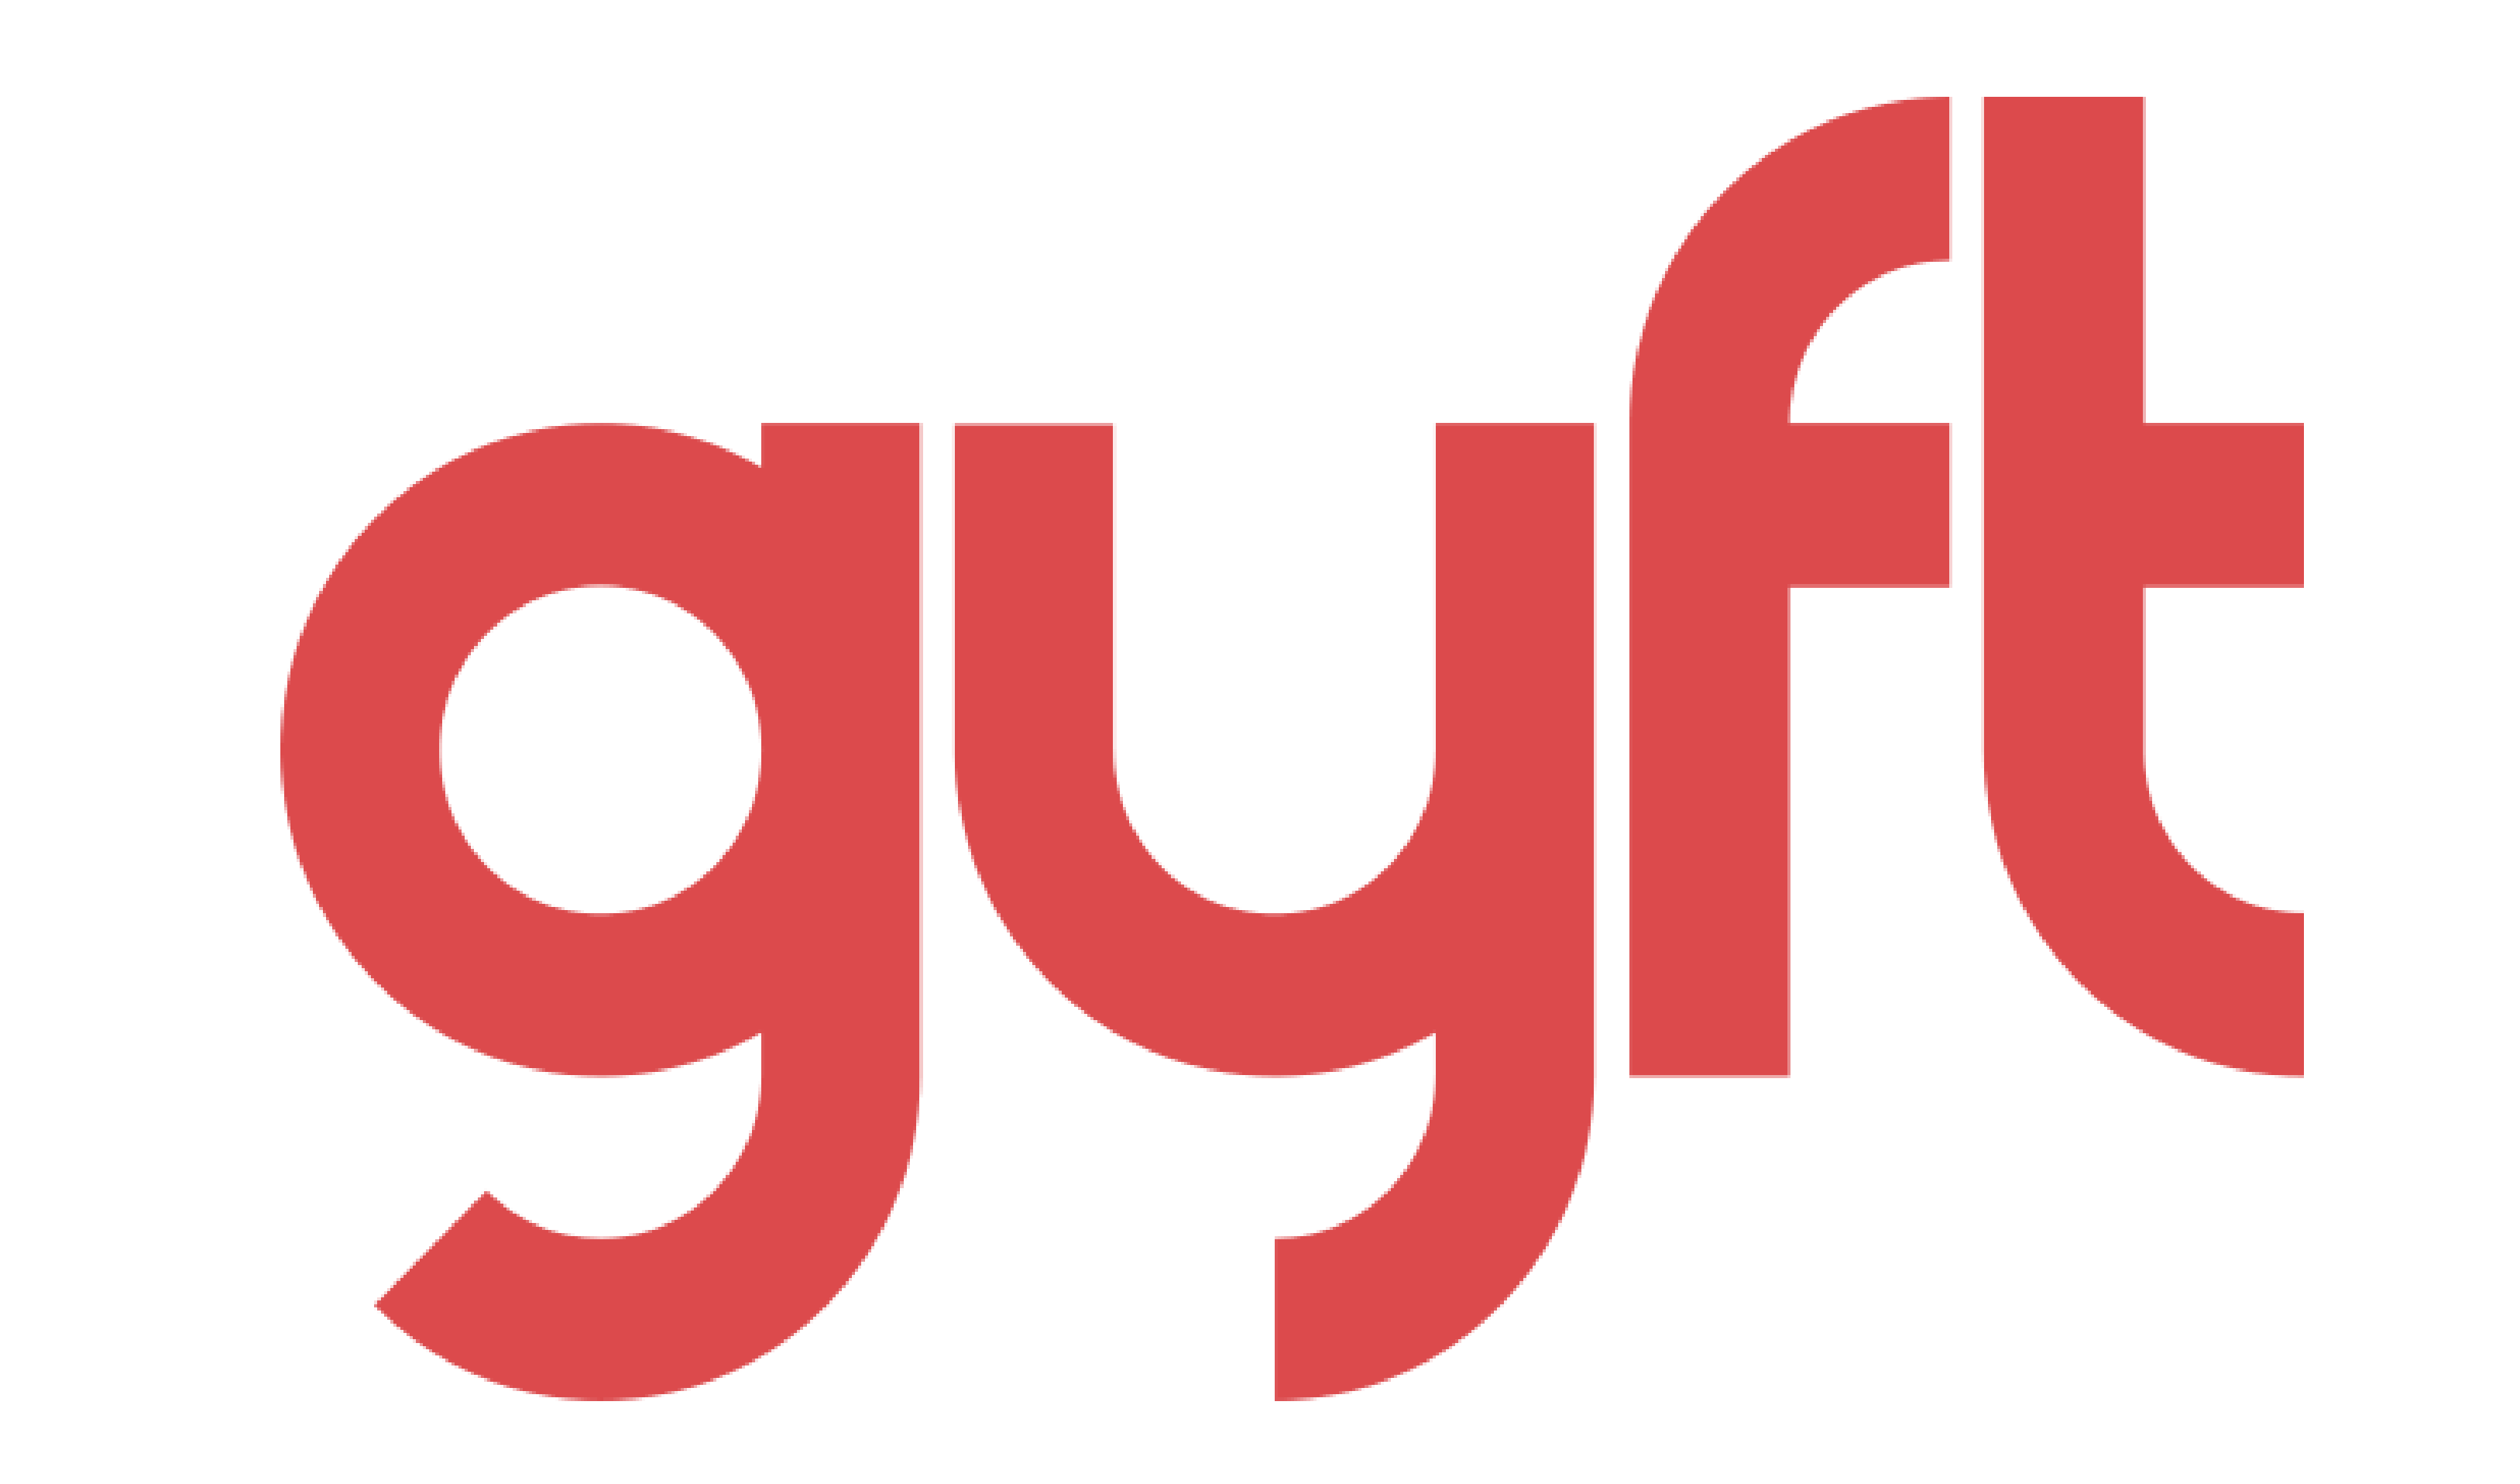 Gyft logo